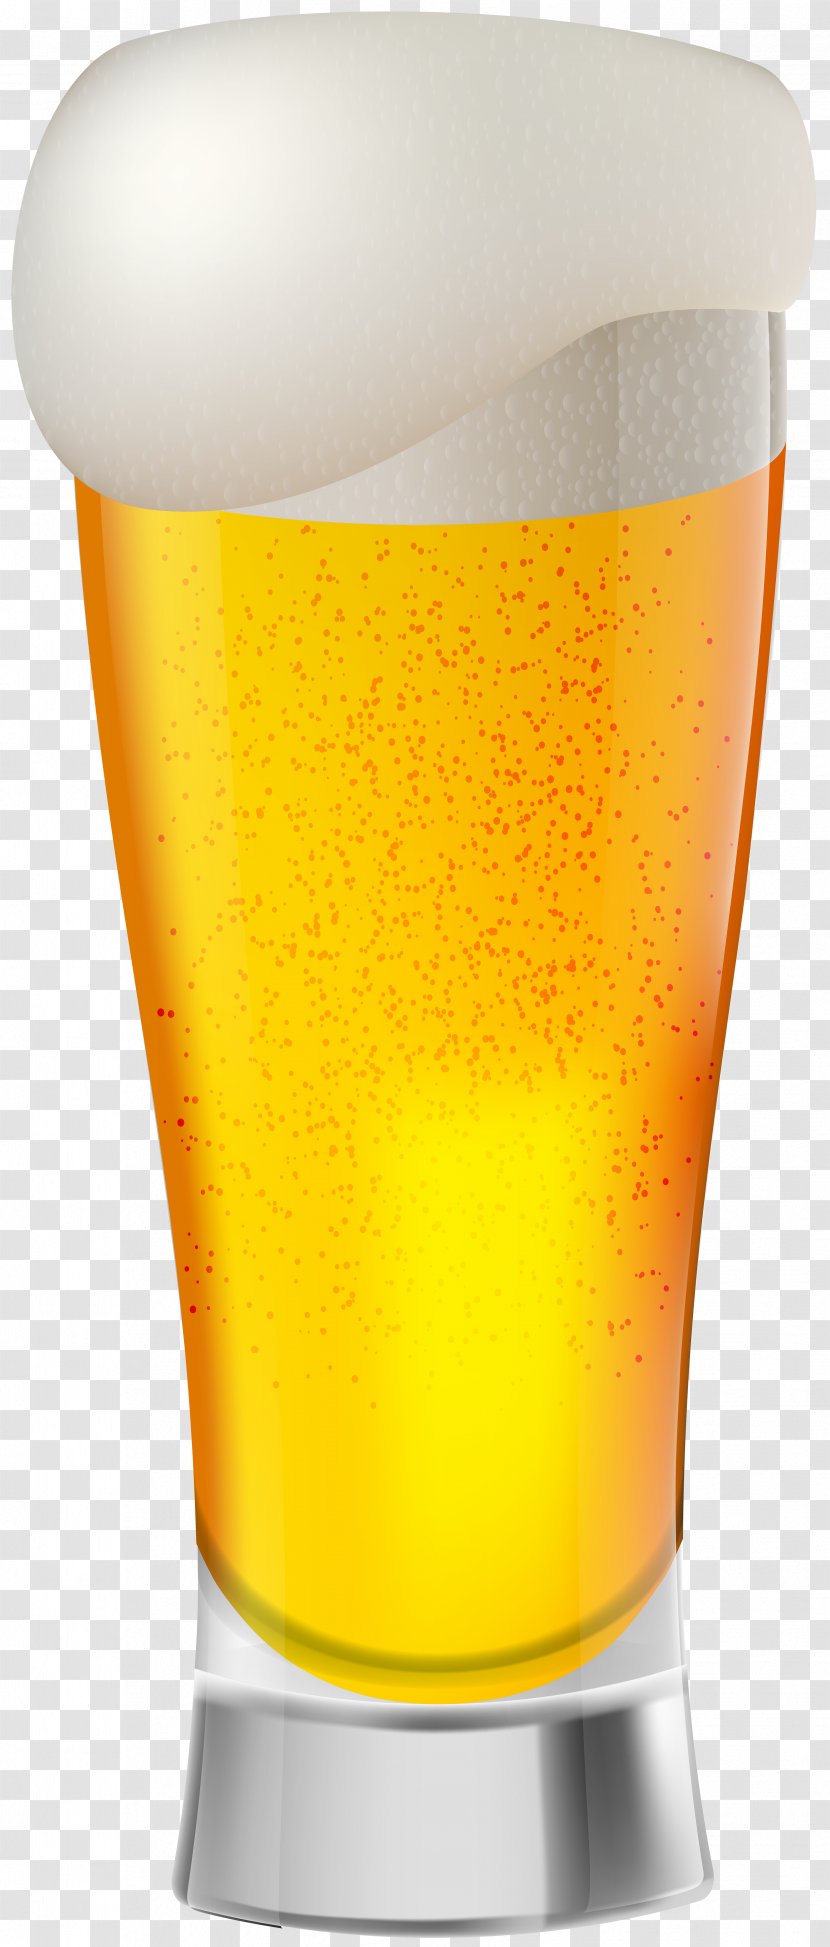 Beer Pint Glass Orange Drink United States Of America - Clip Art Transparent PNG